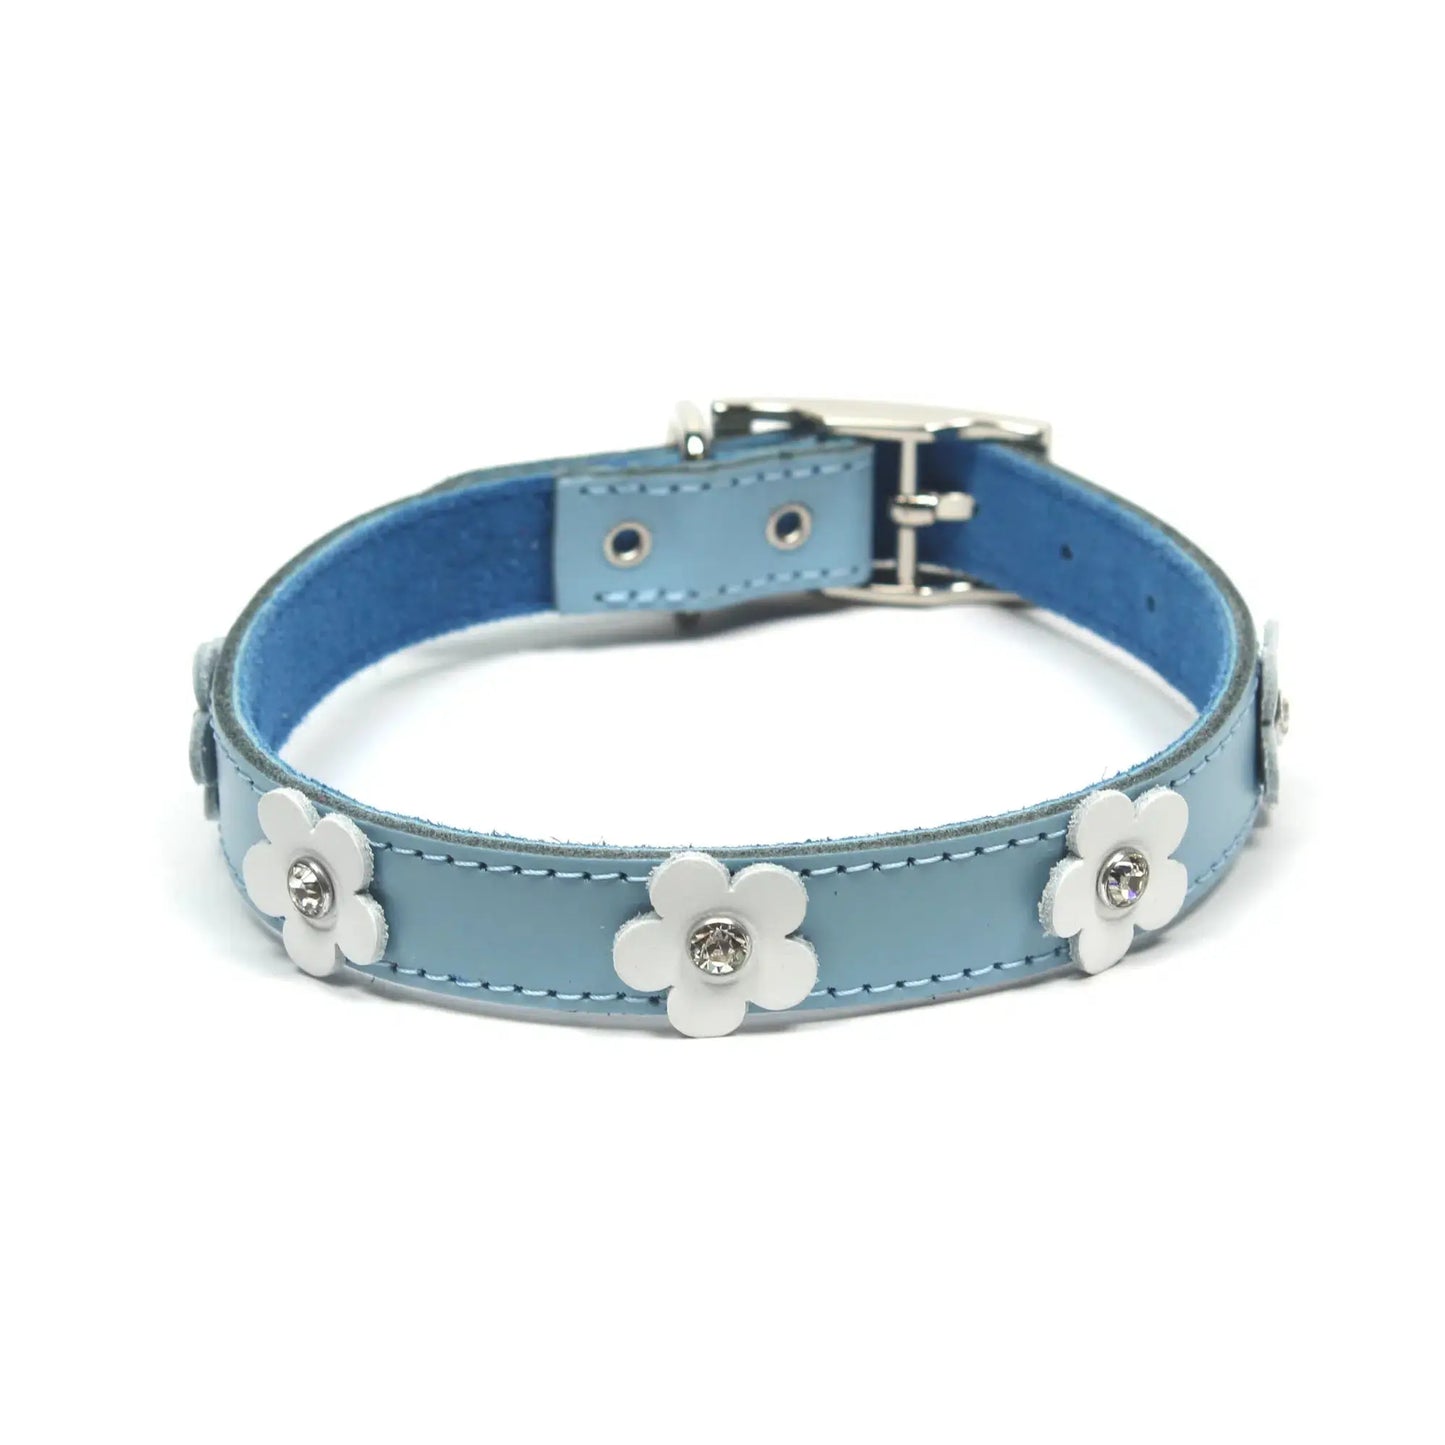 leather flower dog collar